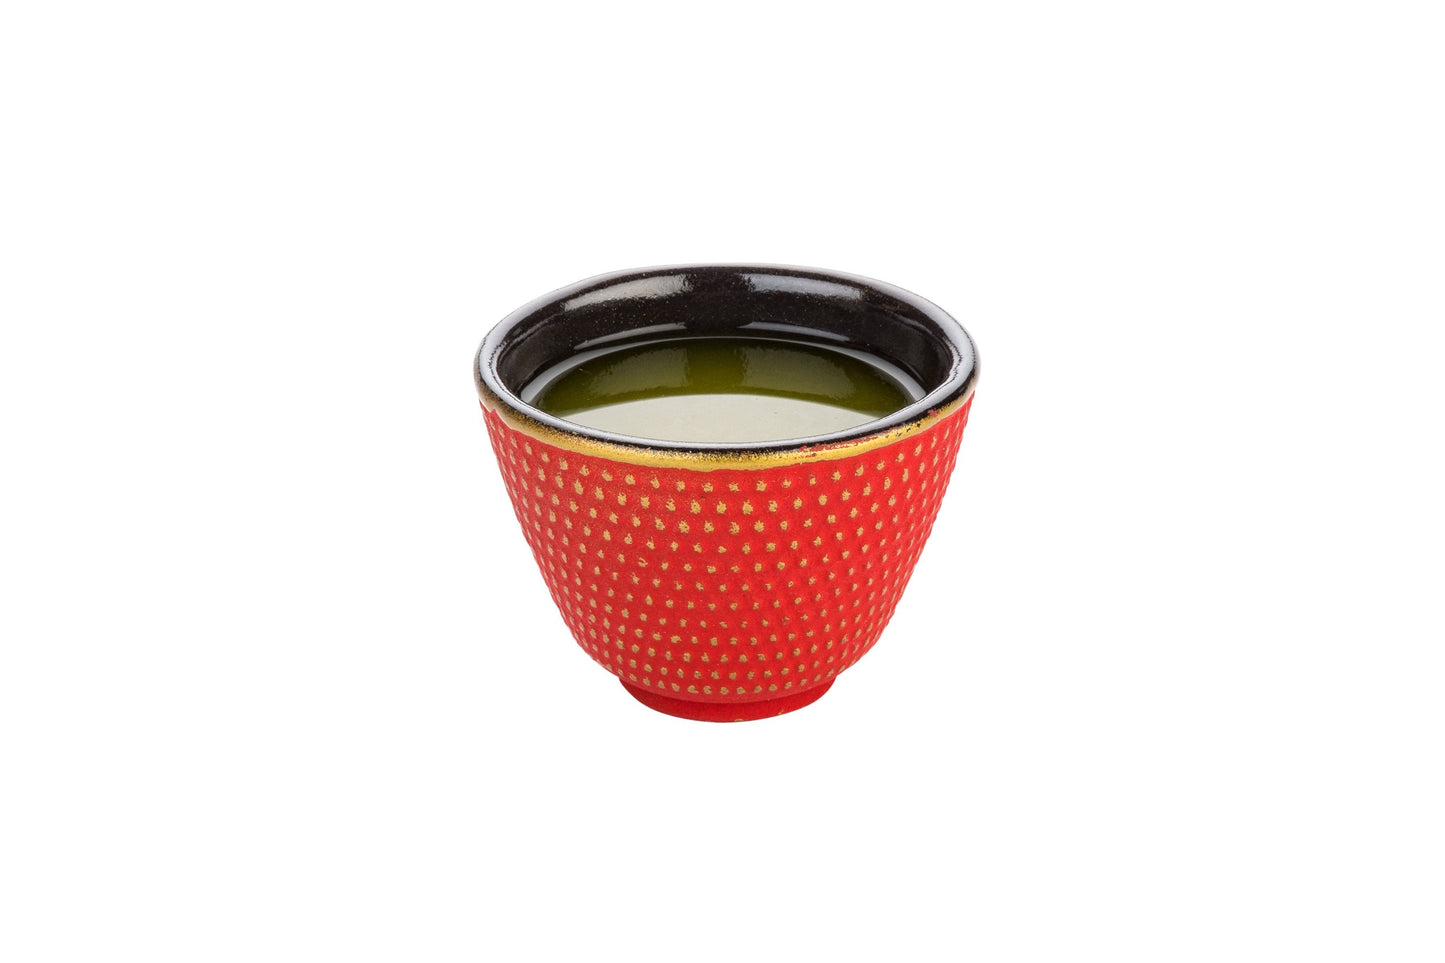 Tetsubin 2 oz Red Cast Iron Tea Cup - Hobnail - 2 1/2" x 2 1/2" x 1 3/4" - 2 count box